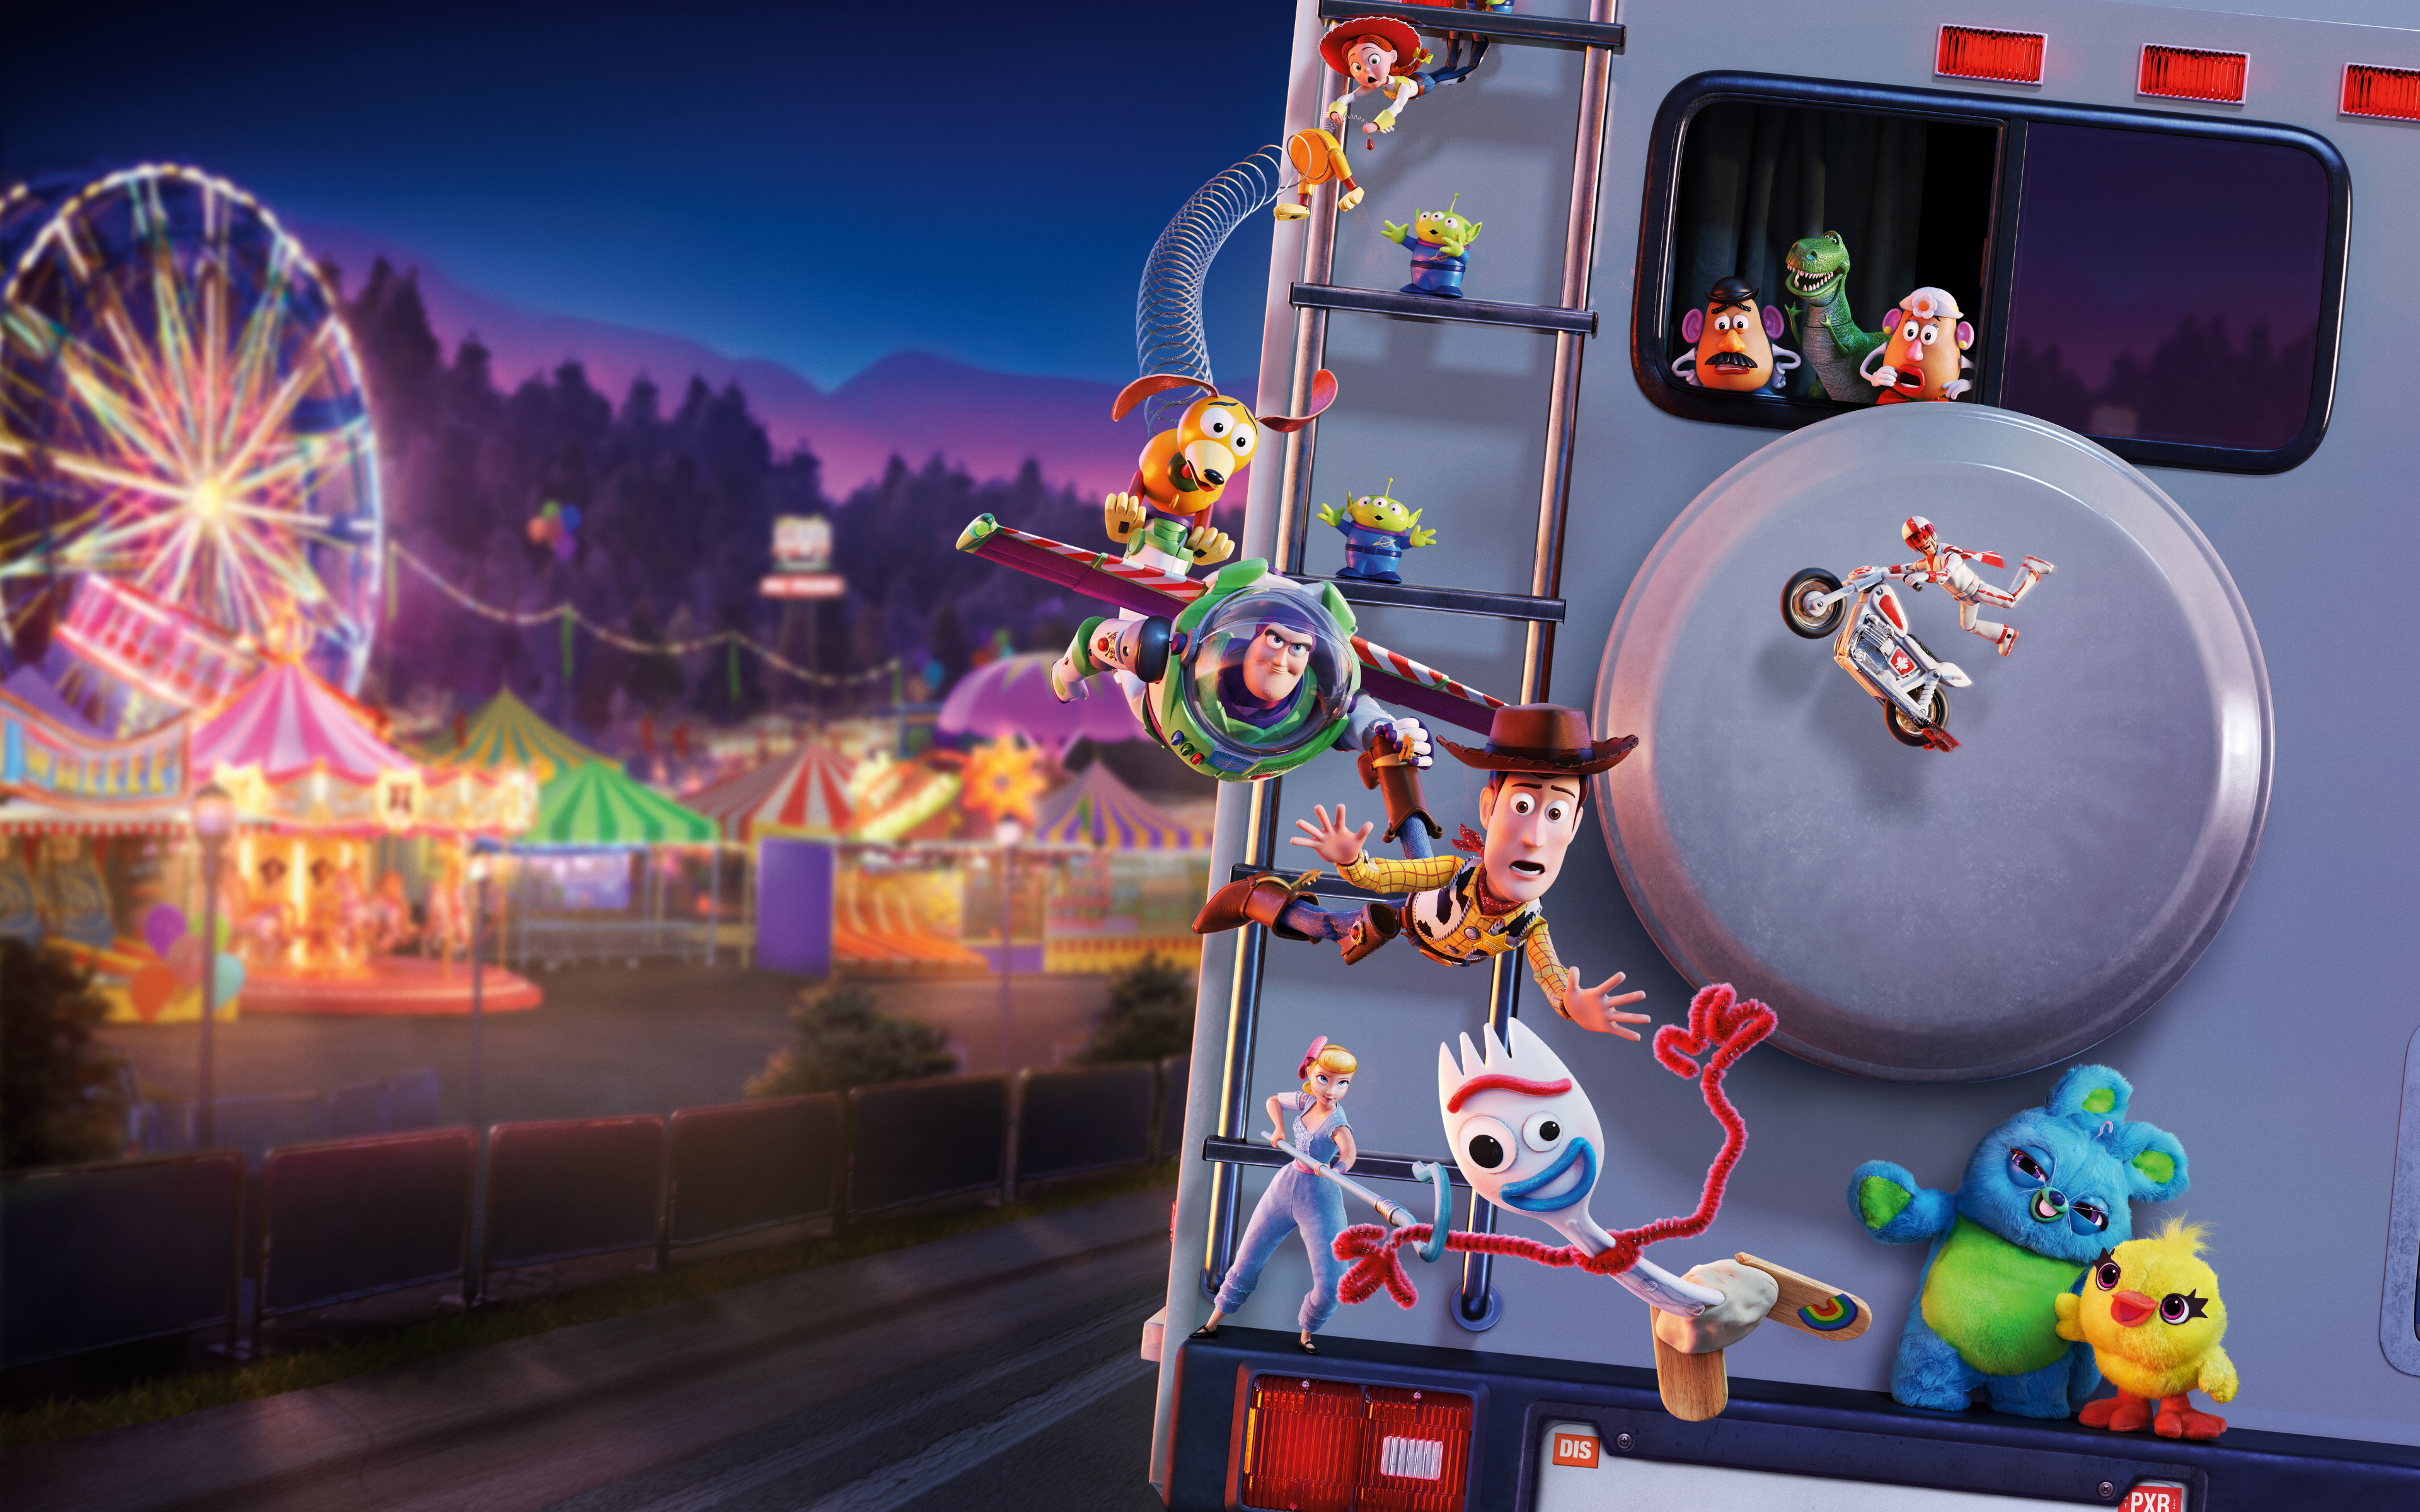 40 Gambar Wallpaper Pc Hd Toy Story terbaru 2020